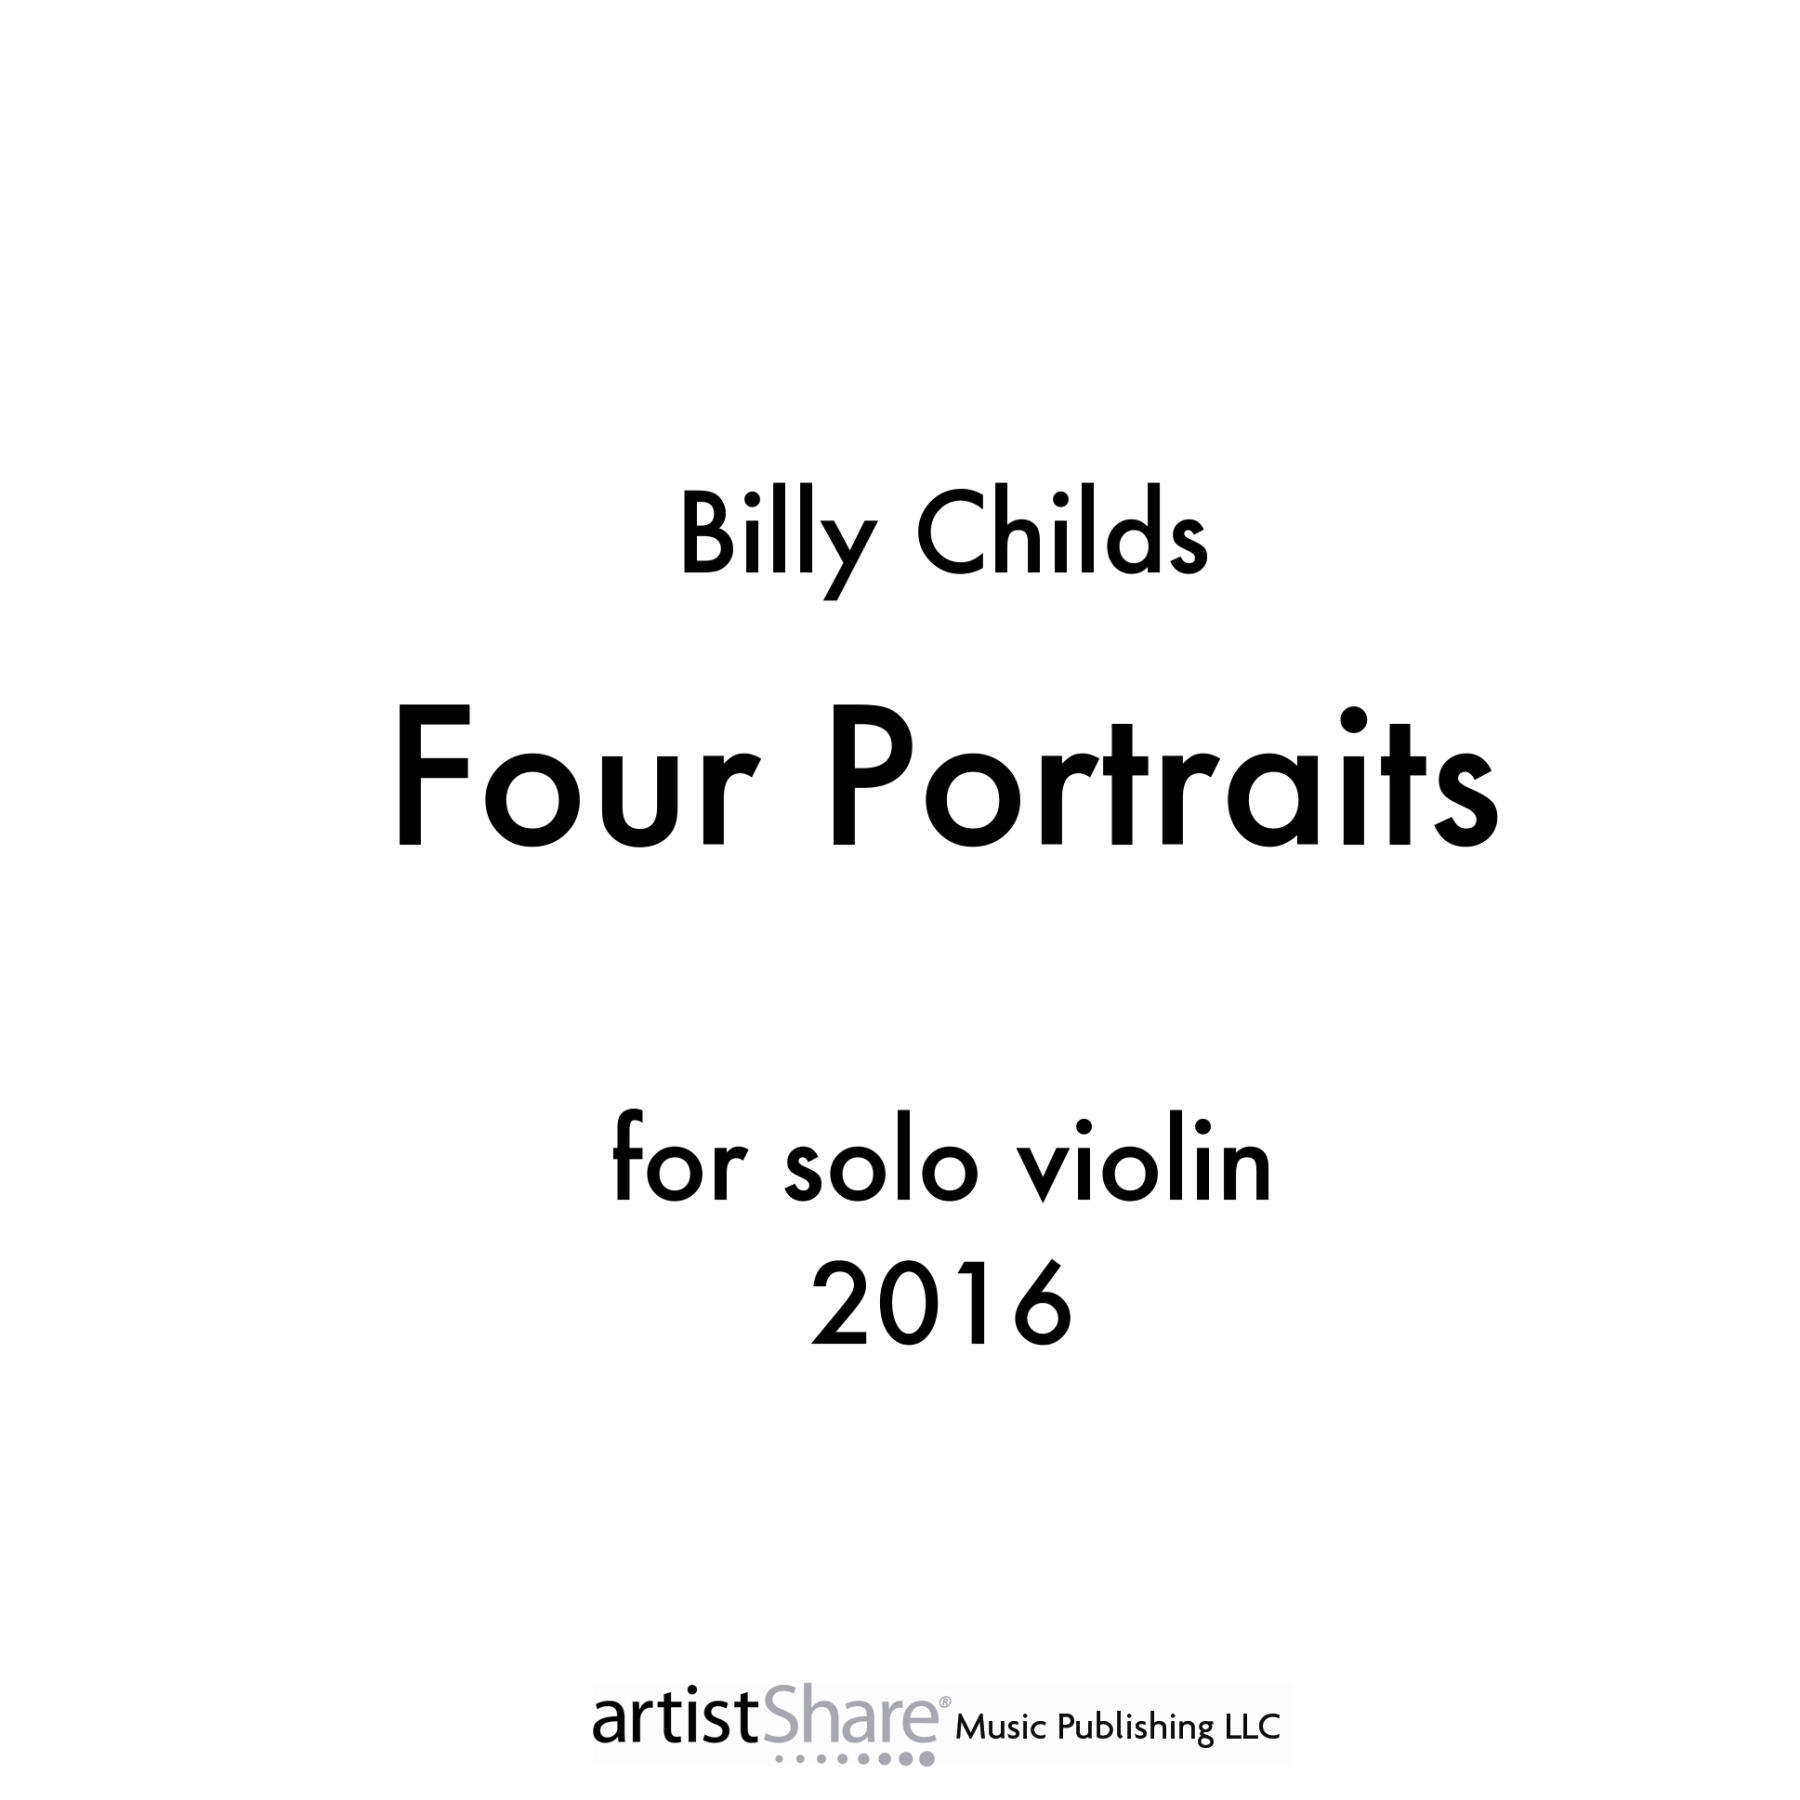 Four Portraits for Solo Violin